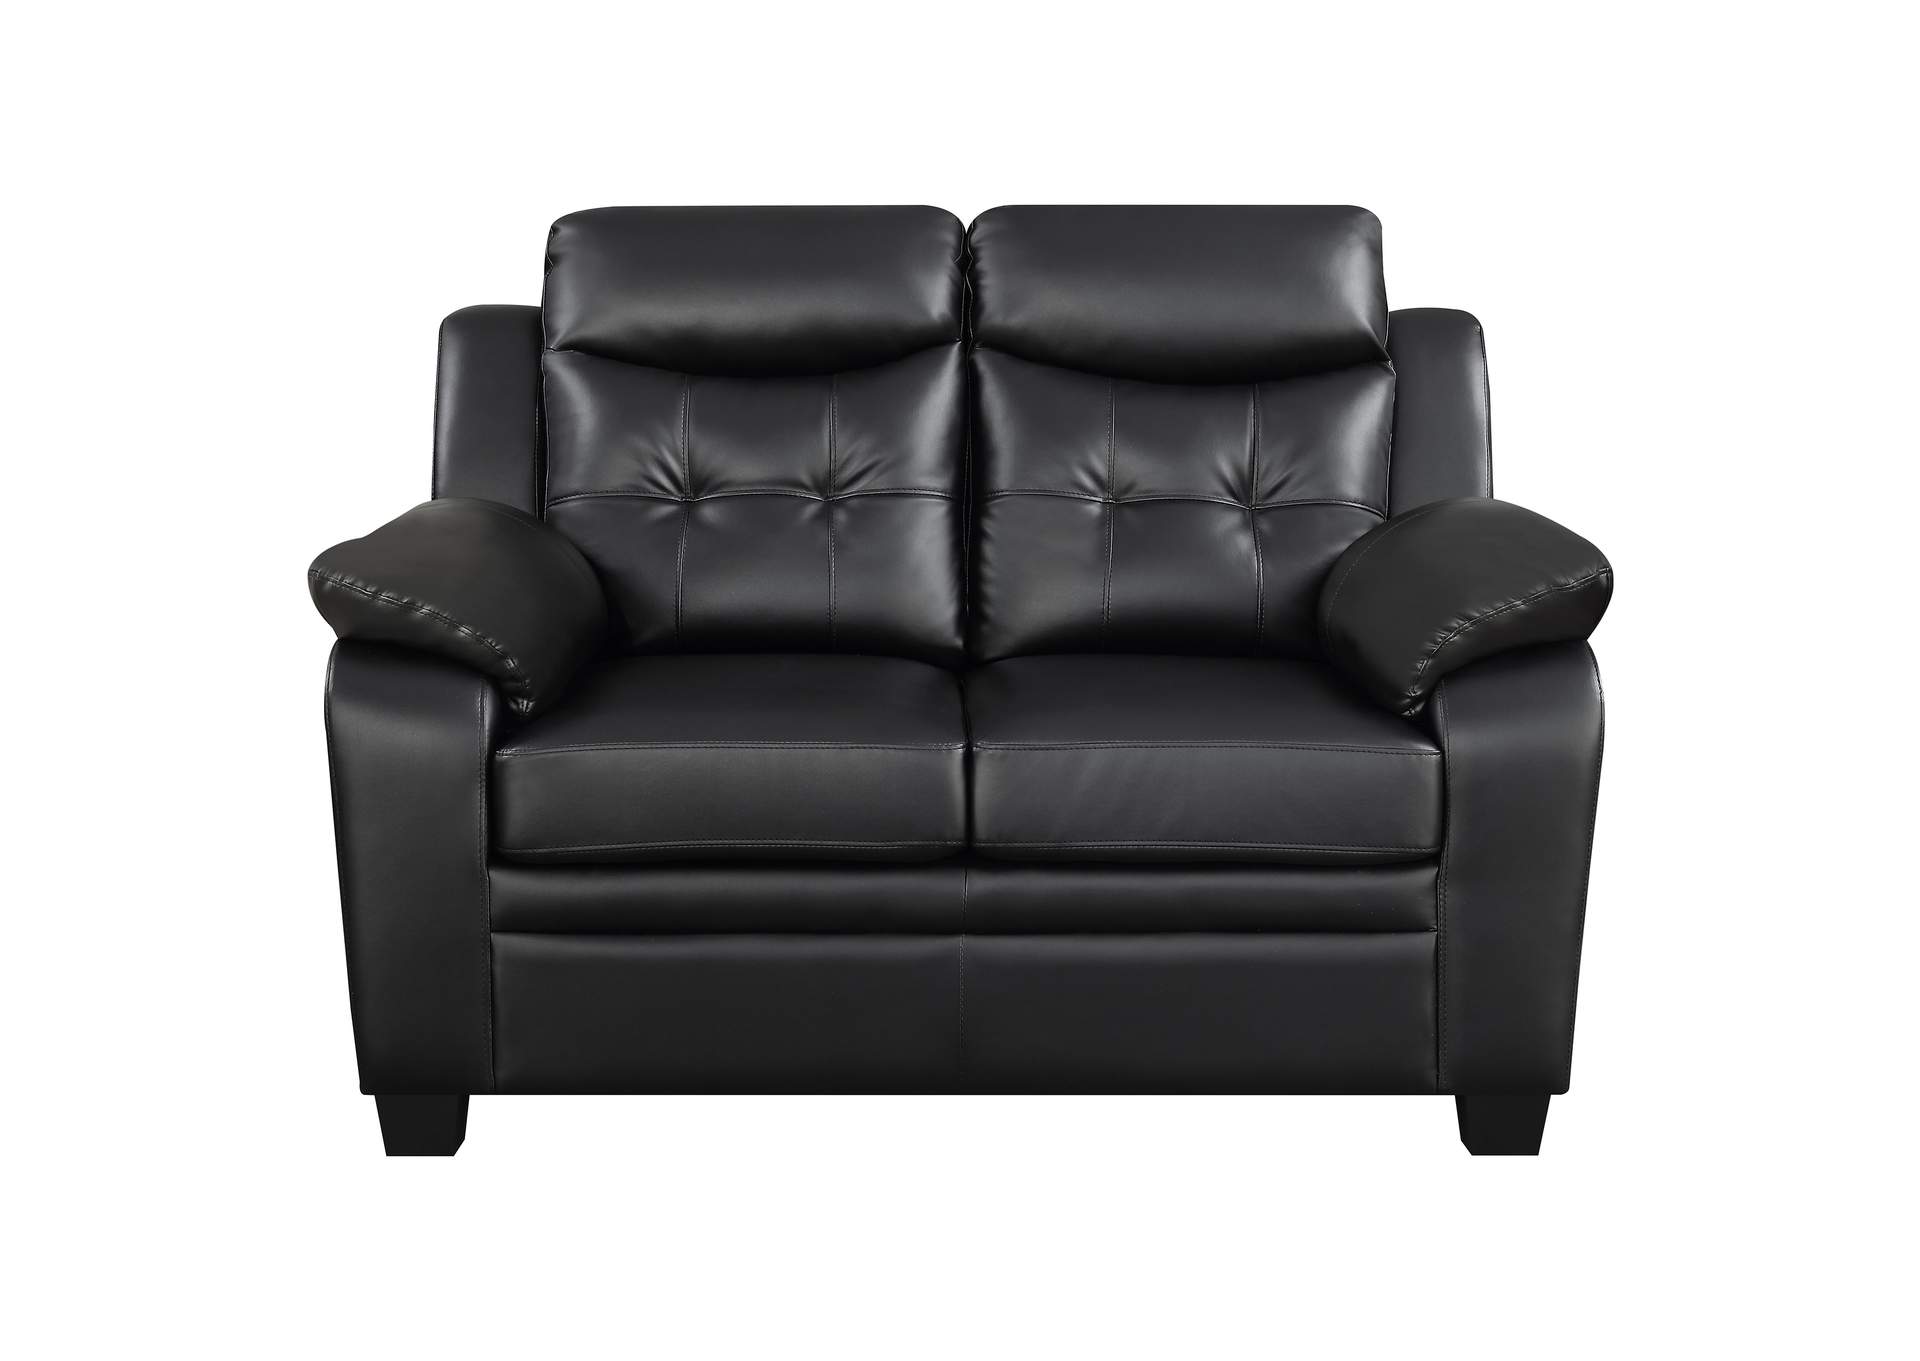 Finley Tufted Upholstered Loveseat Black,Coaster Furniture